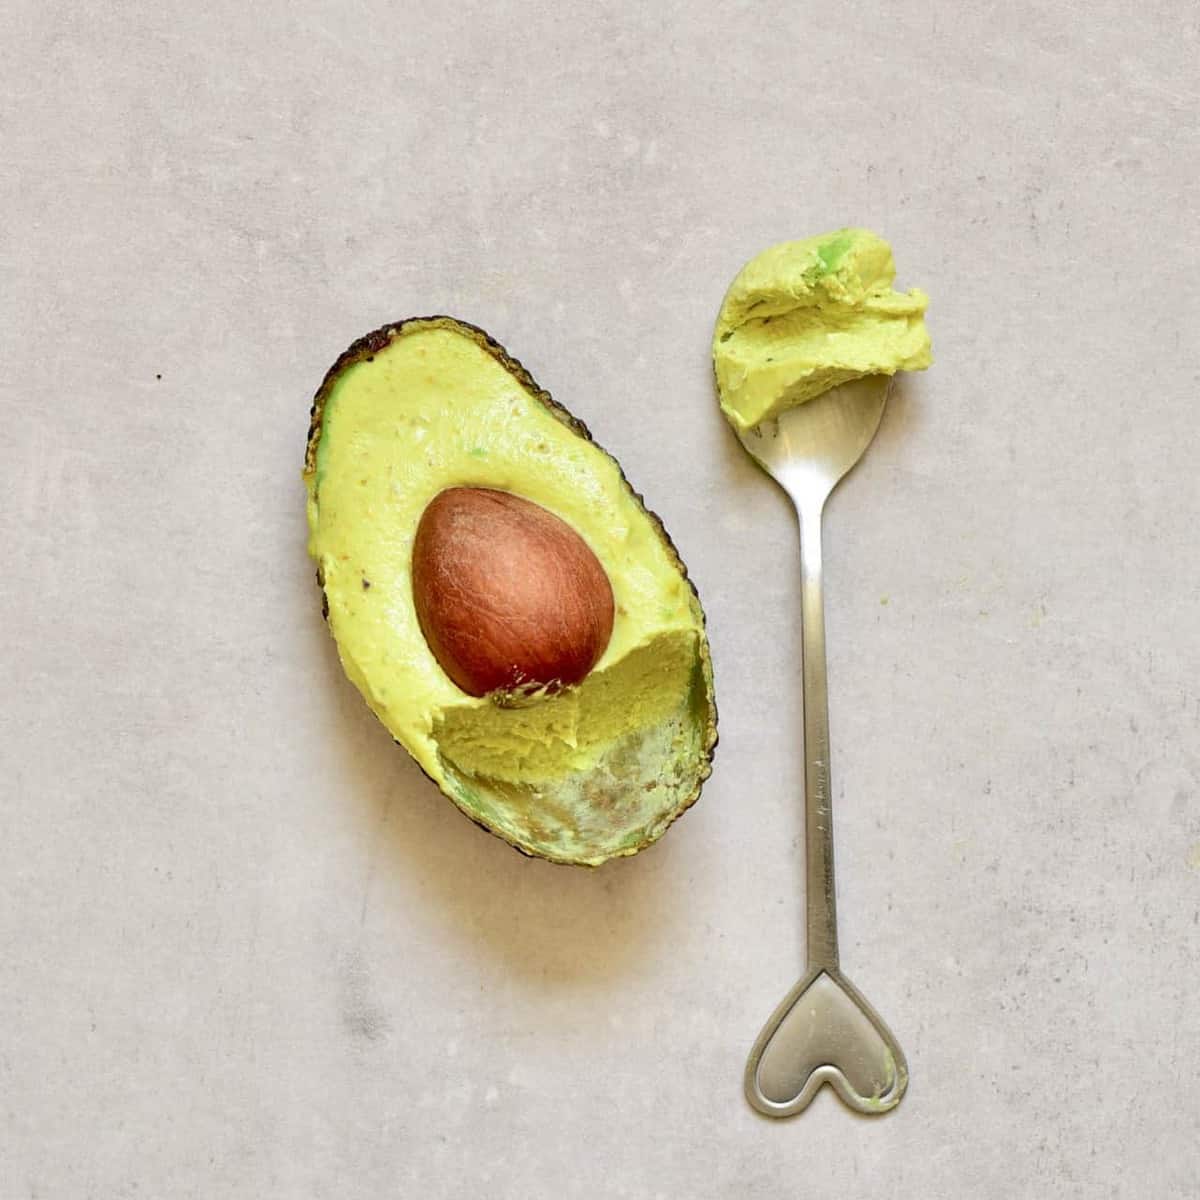 Simple, healthy no churn 4-ingredient dairy-free avocado ice cream